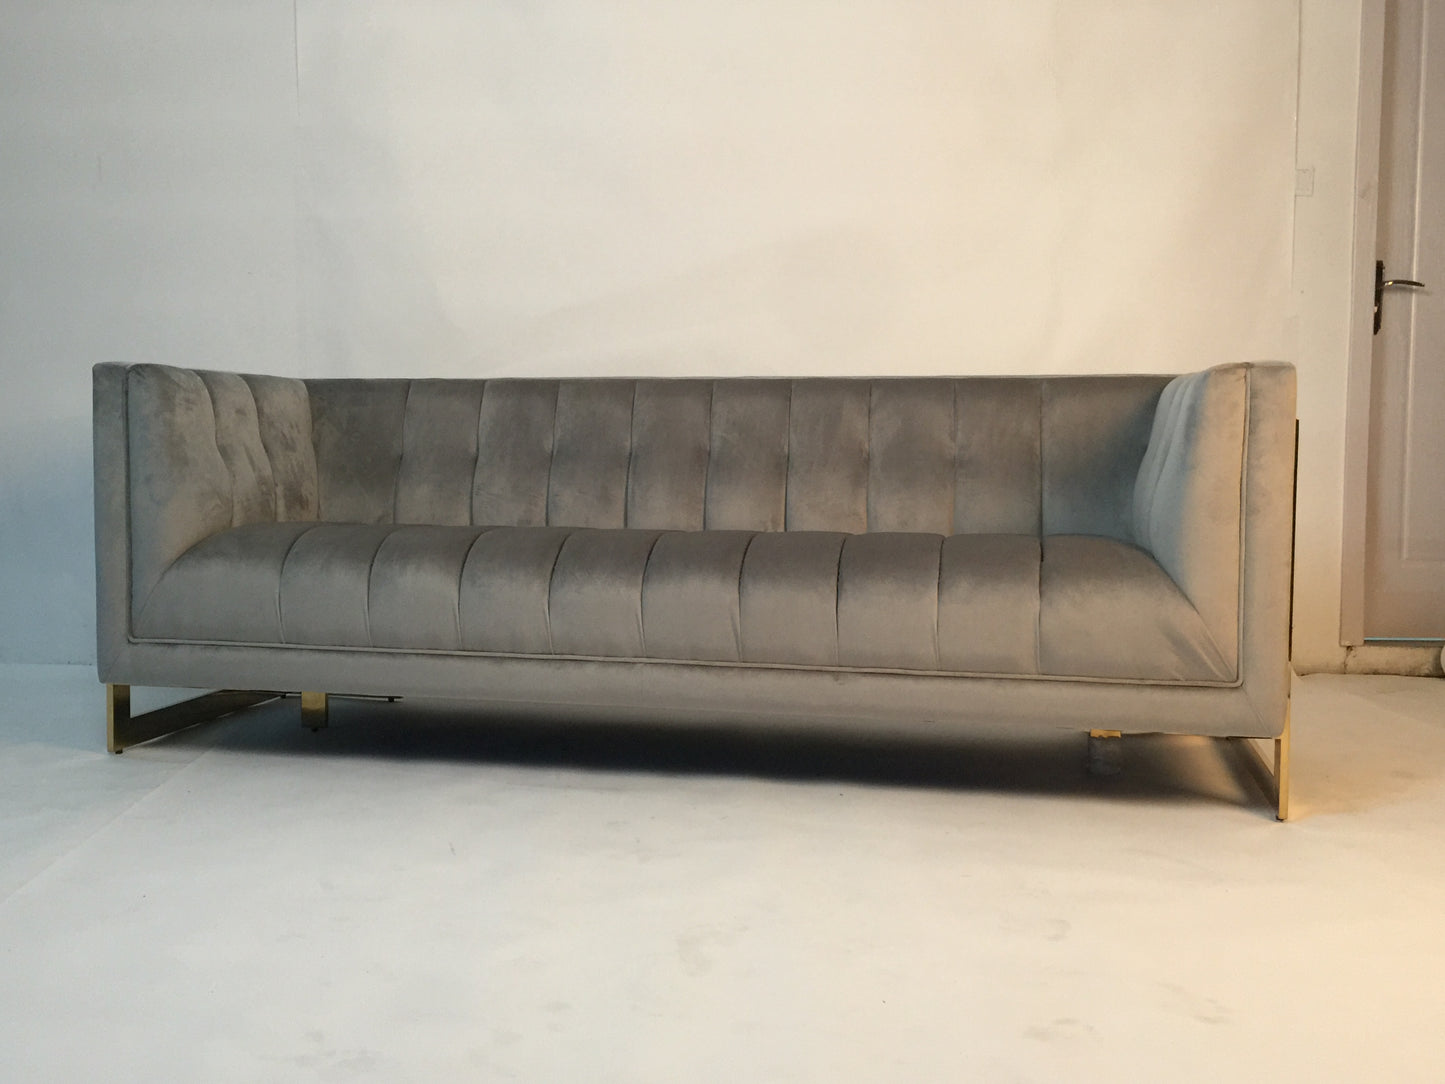 The Kingsley Sofa